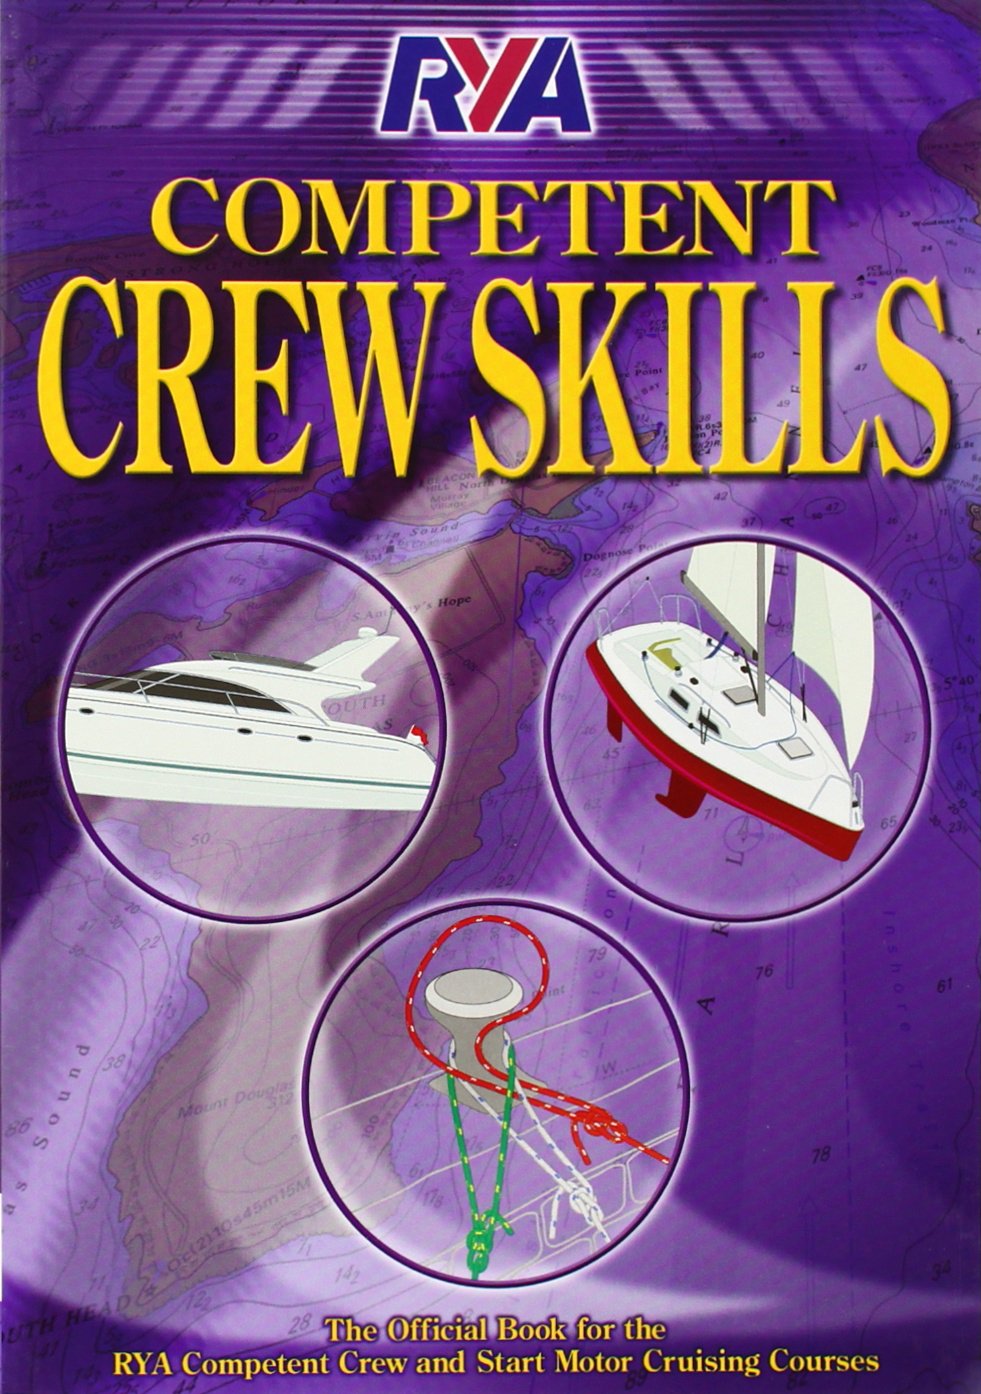 Rya competent crew skill book